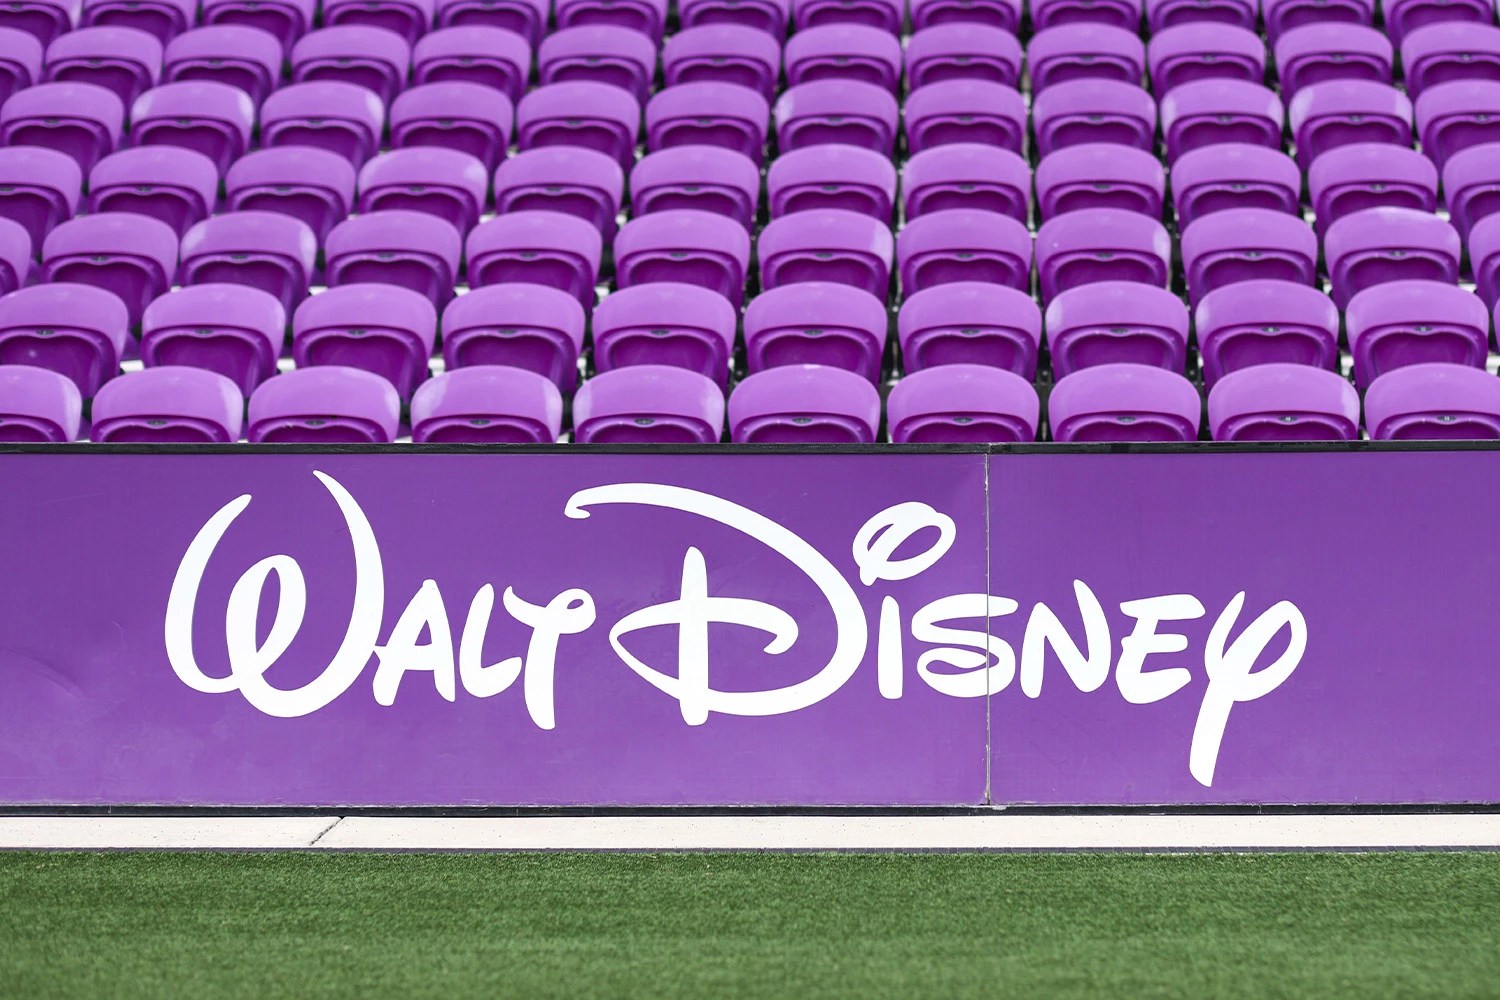 Walt Disney logo at pitch level inside stadium